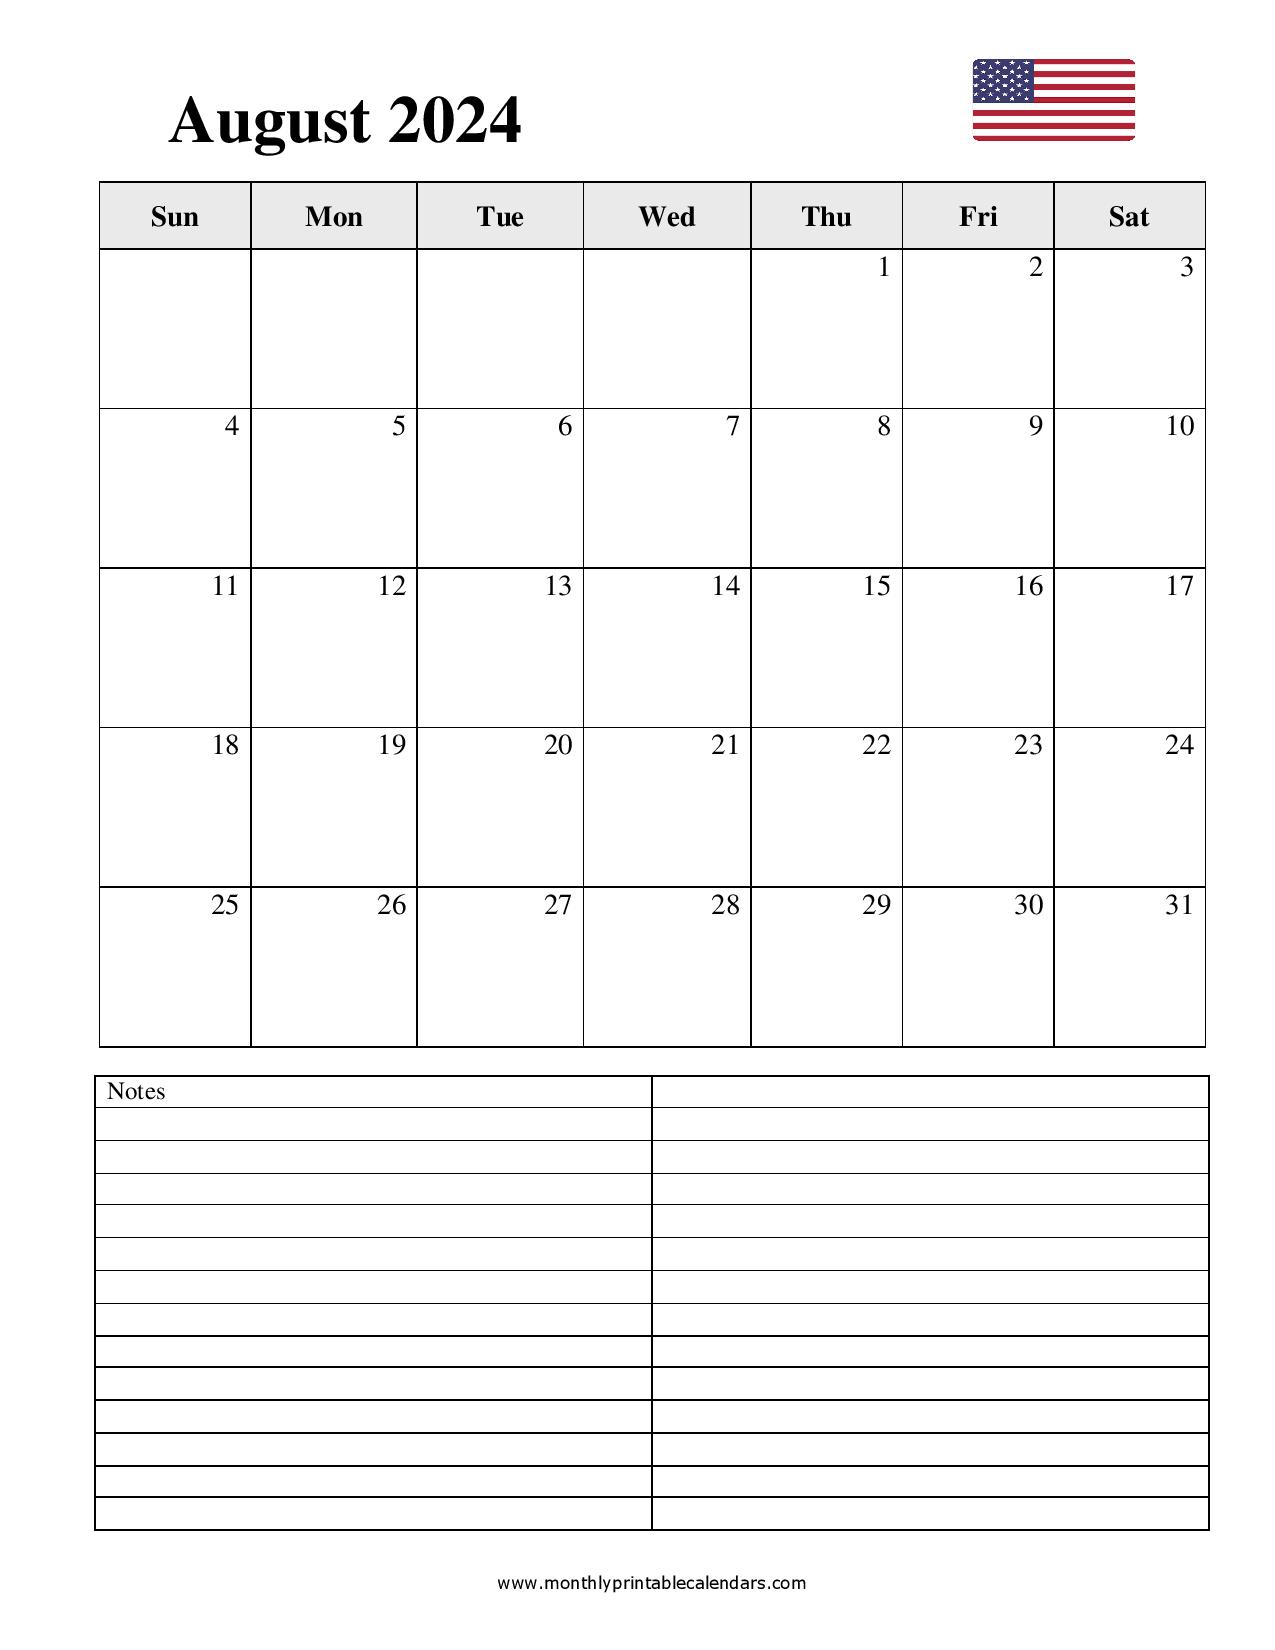 August 2024 Printable Calendar